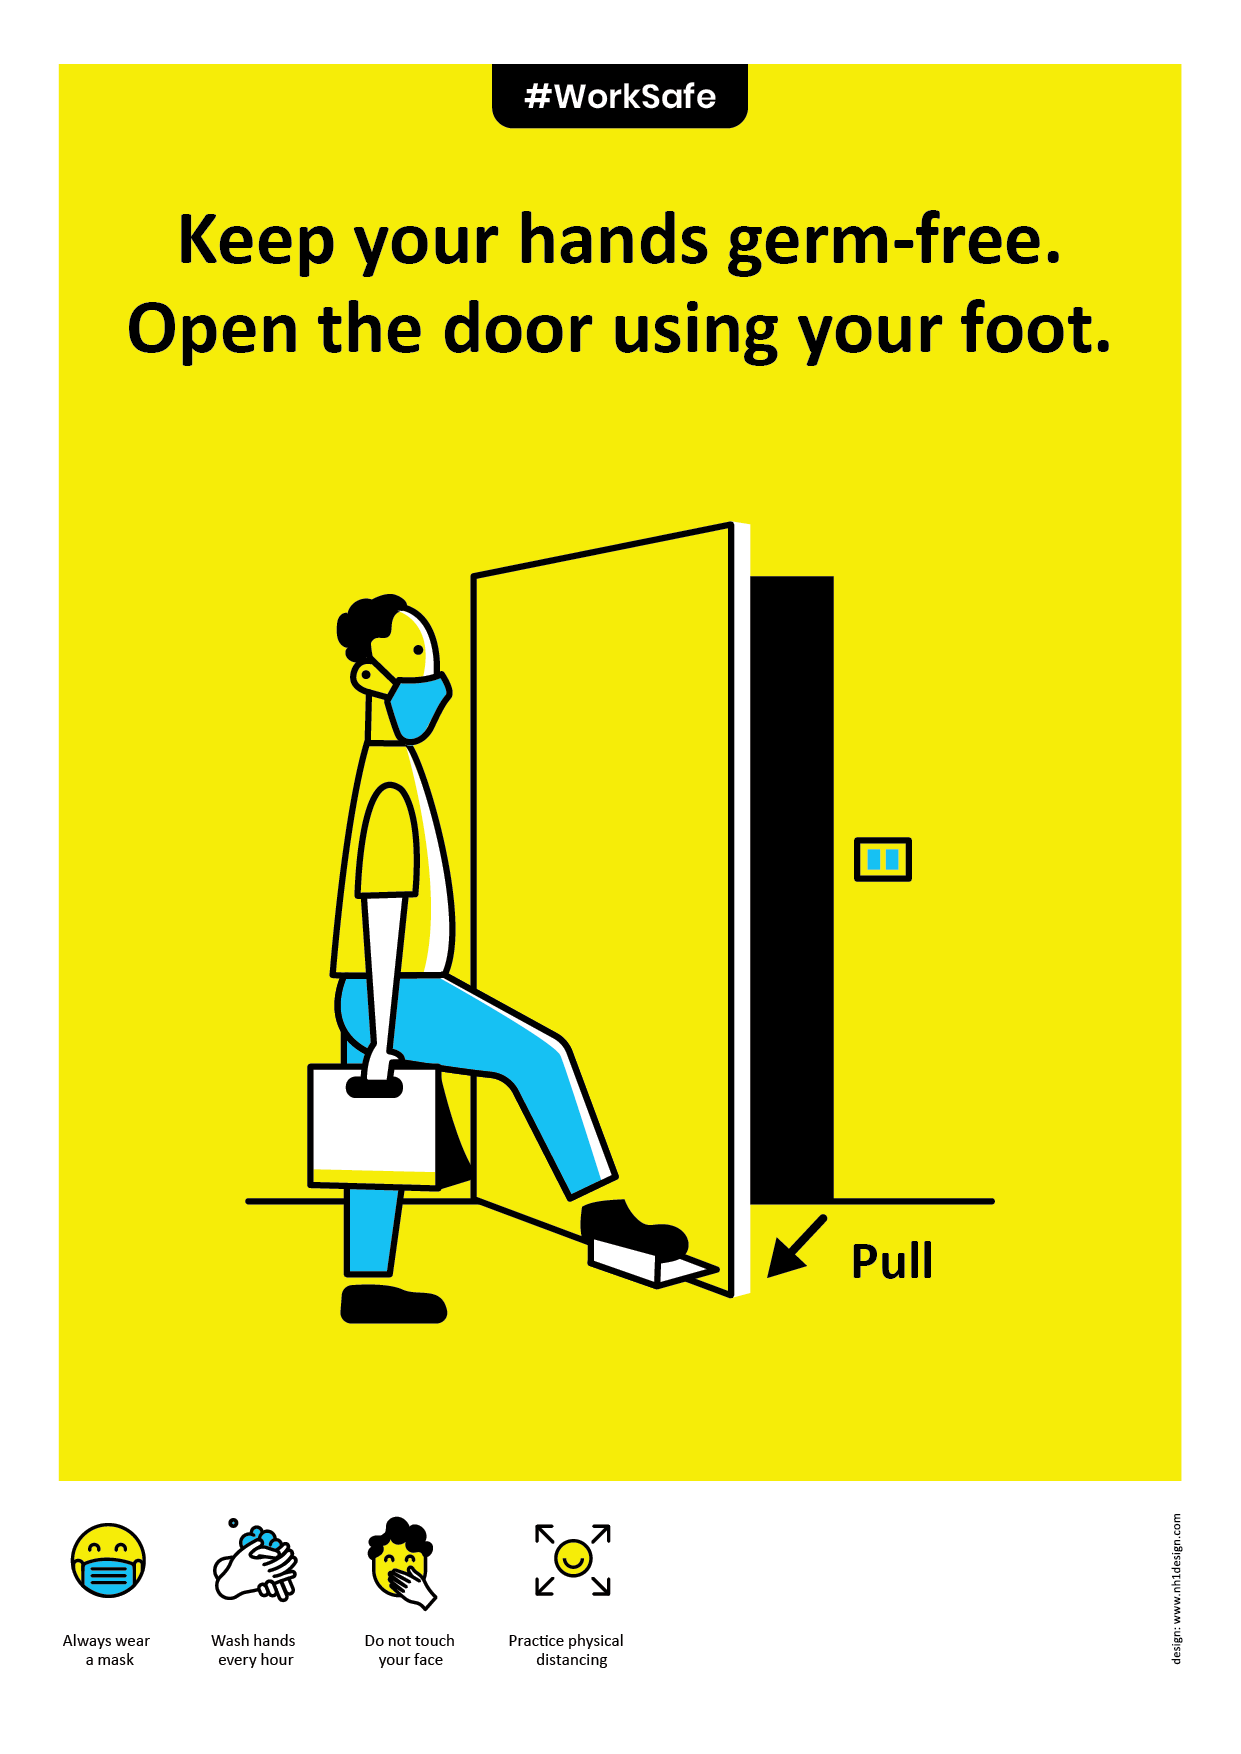 Foot Use Pull _English